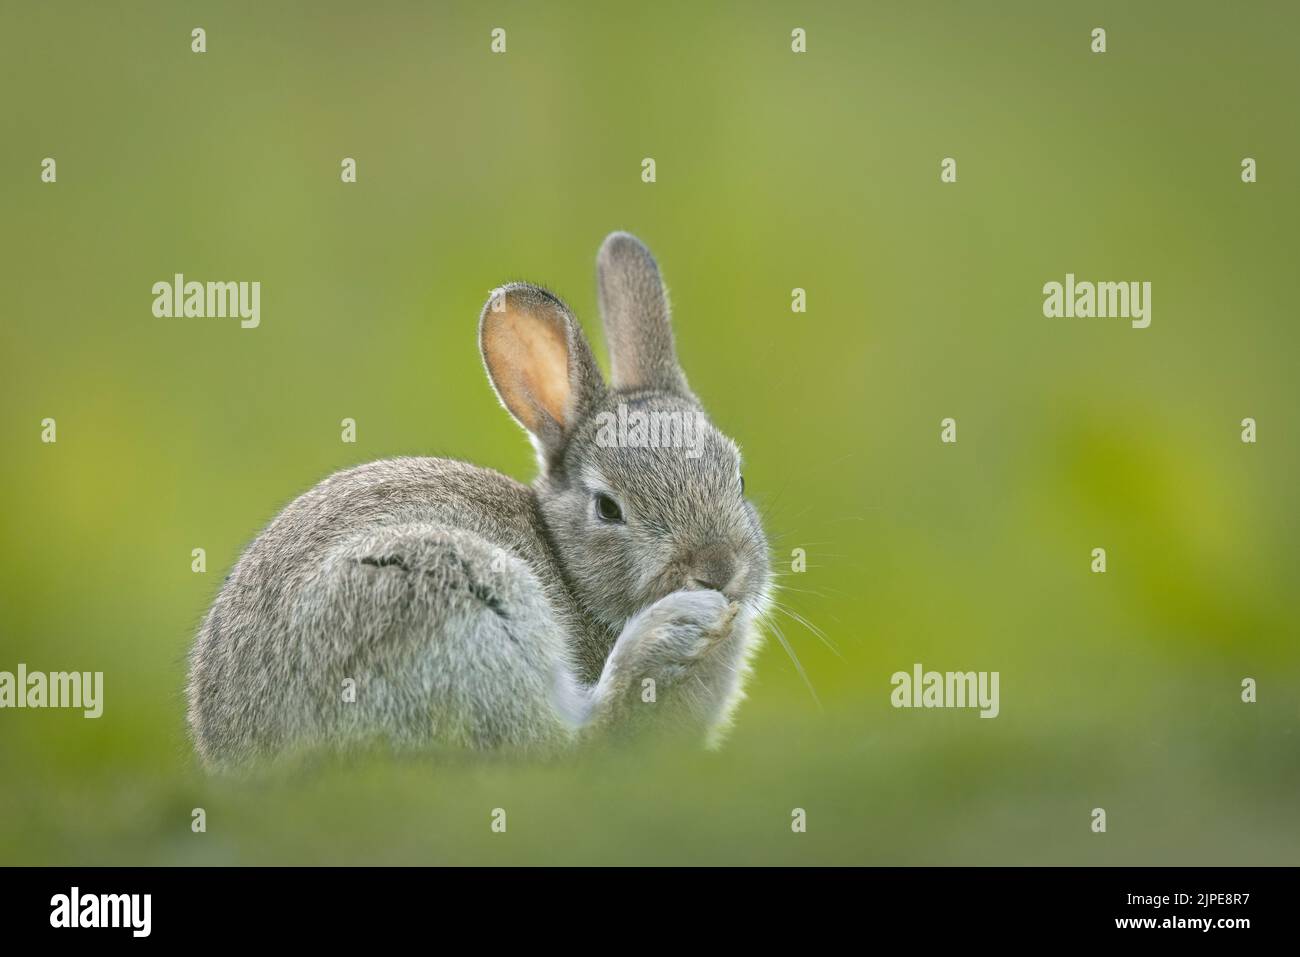 Rabbit looking beautiful in grassland. Stock Photo